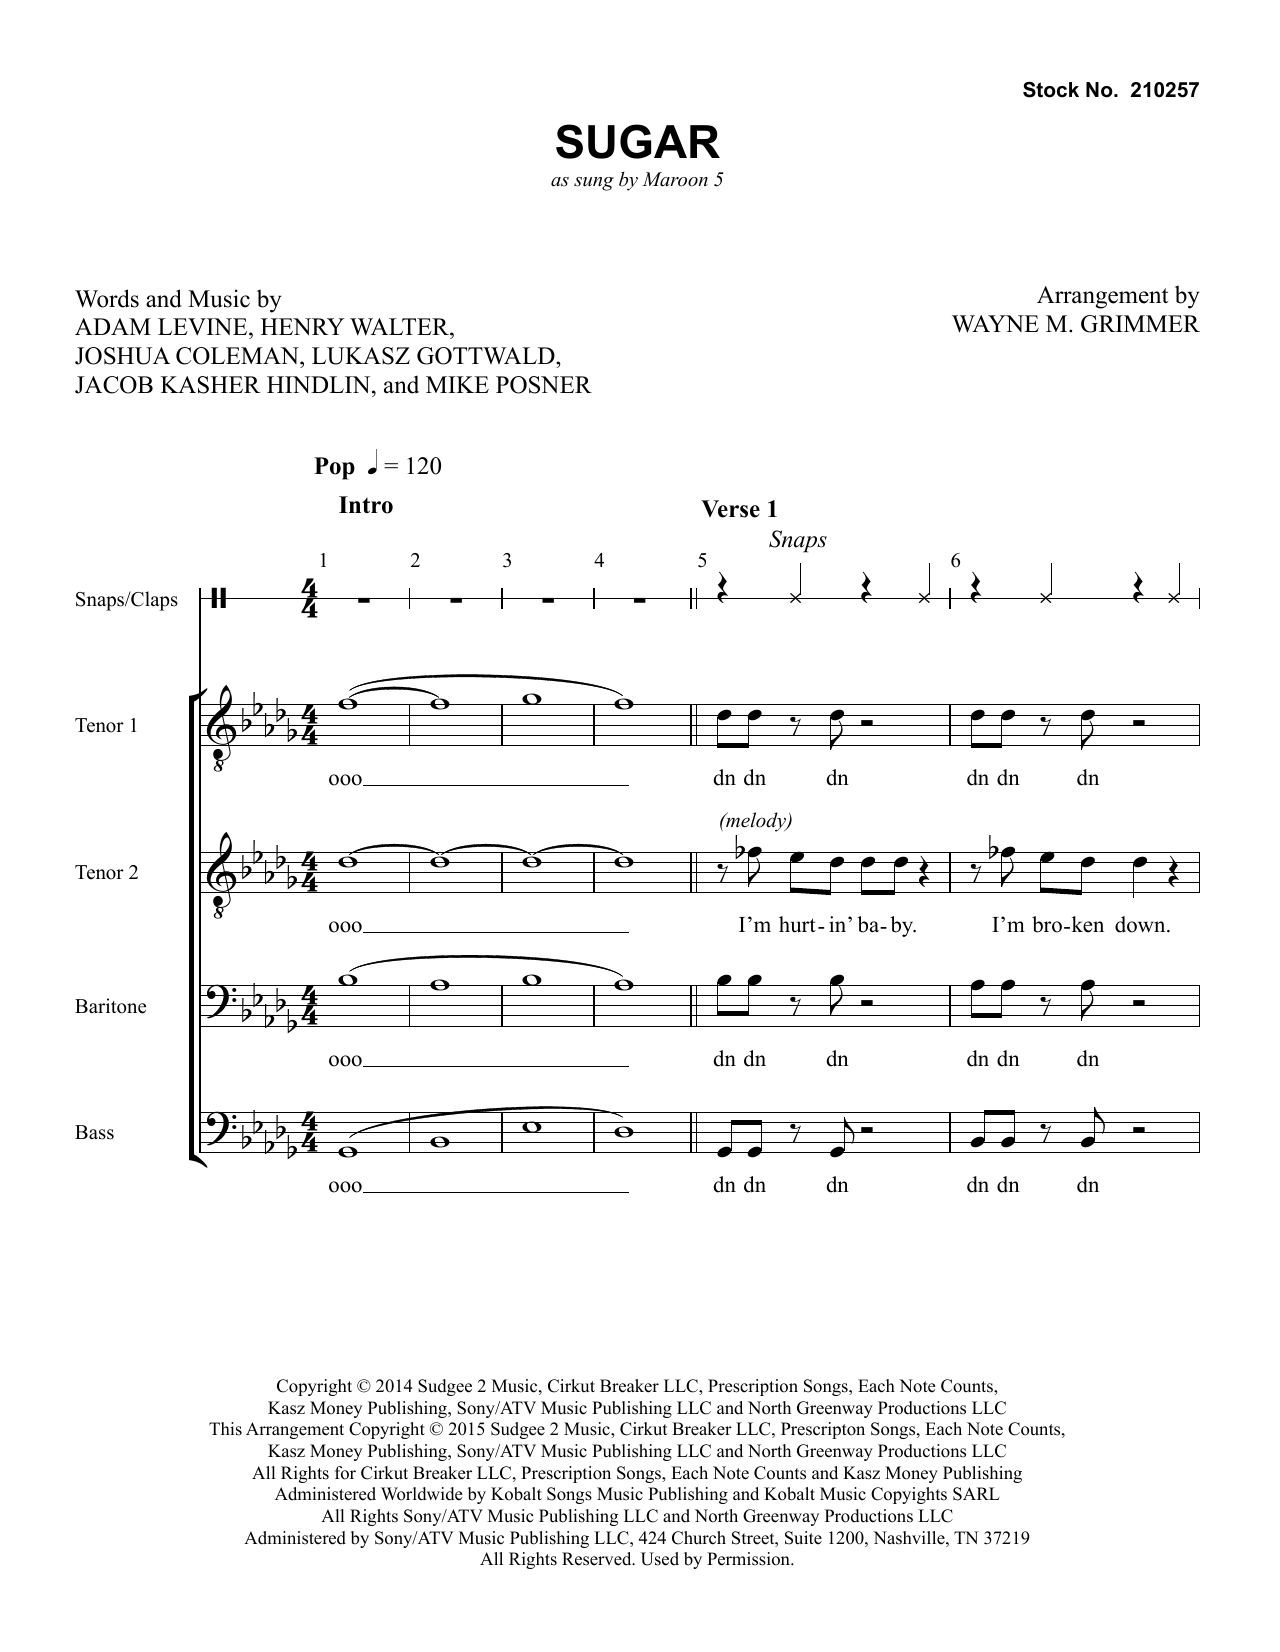 Maroon 5 Sugar (arr. Wayne Grimmer) sheet music notes and chords arranged for SATB Choir